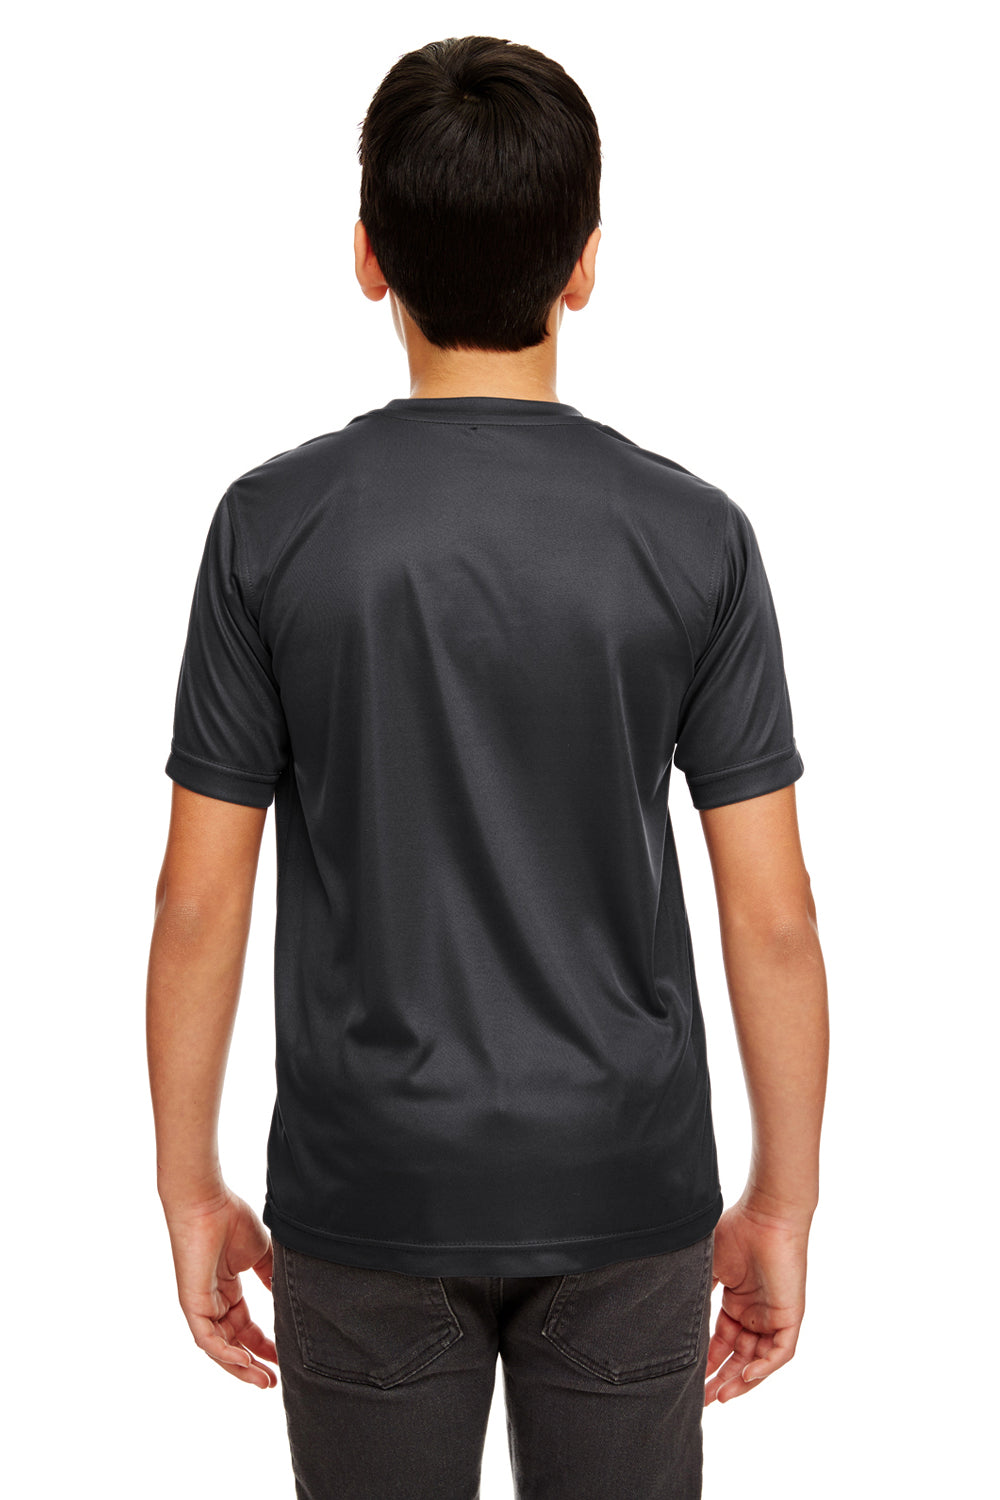 UltraClub 8420Y Youth Cool & Dry Performance Moisture Wicking Short Sleeve Crewneck T-Shirt Black Back